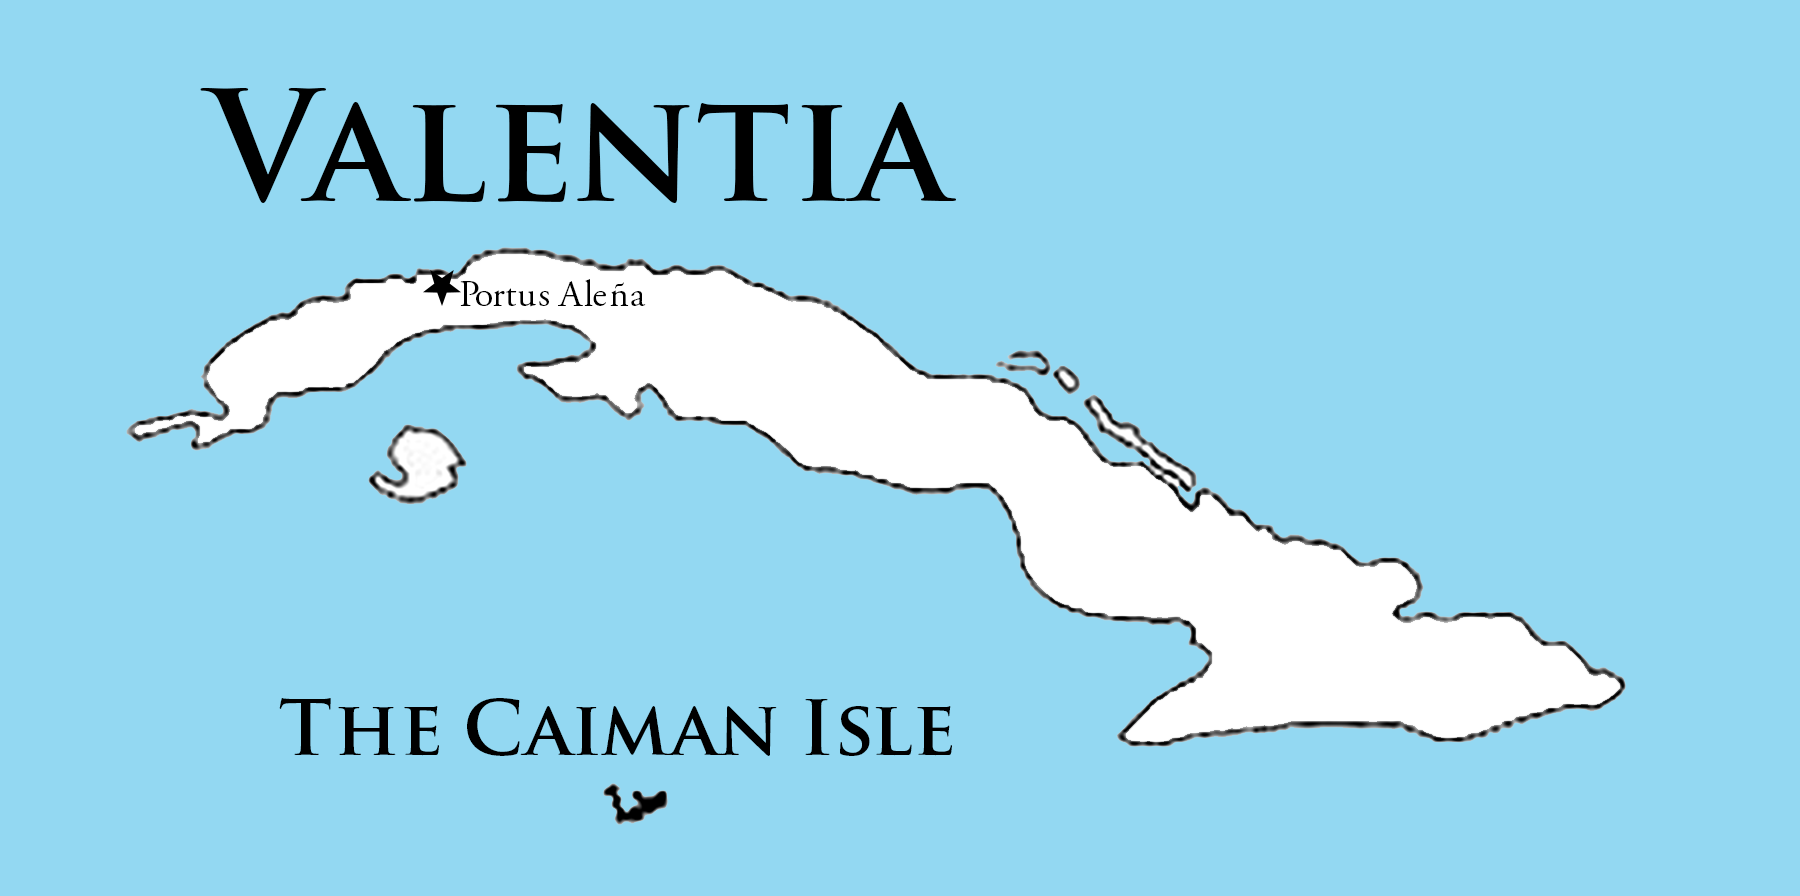 Valentia and the Caiman Isle